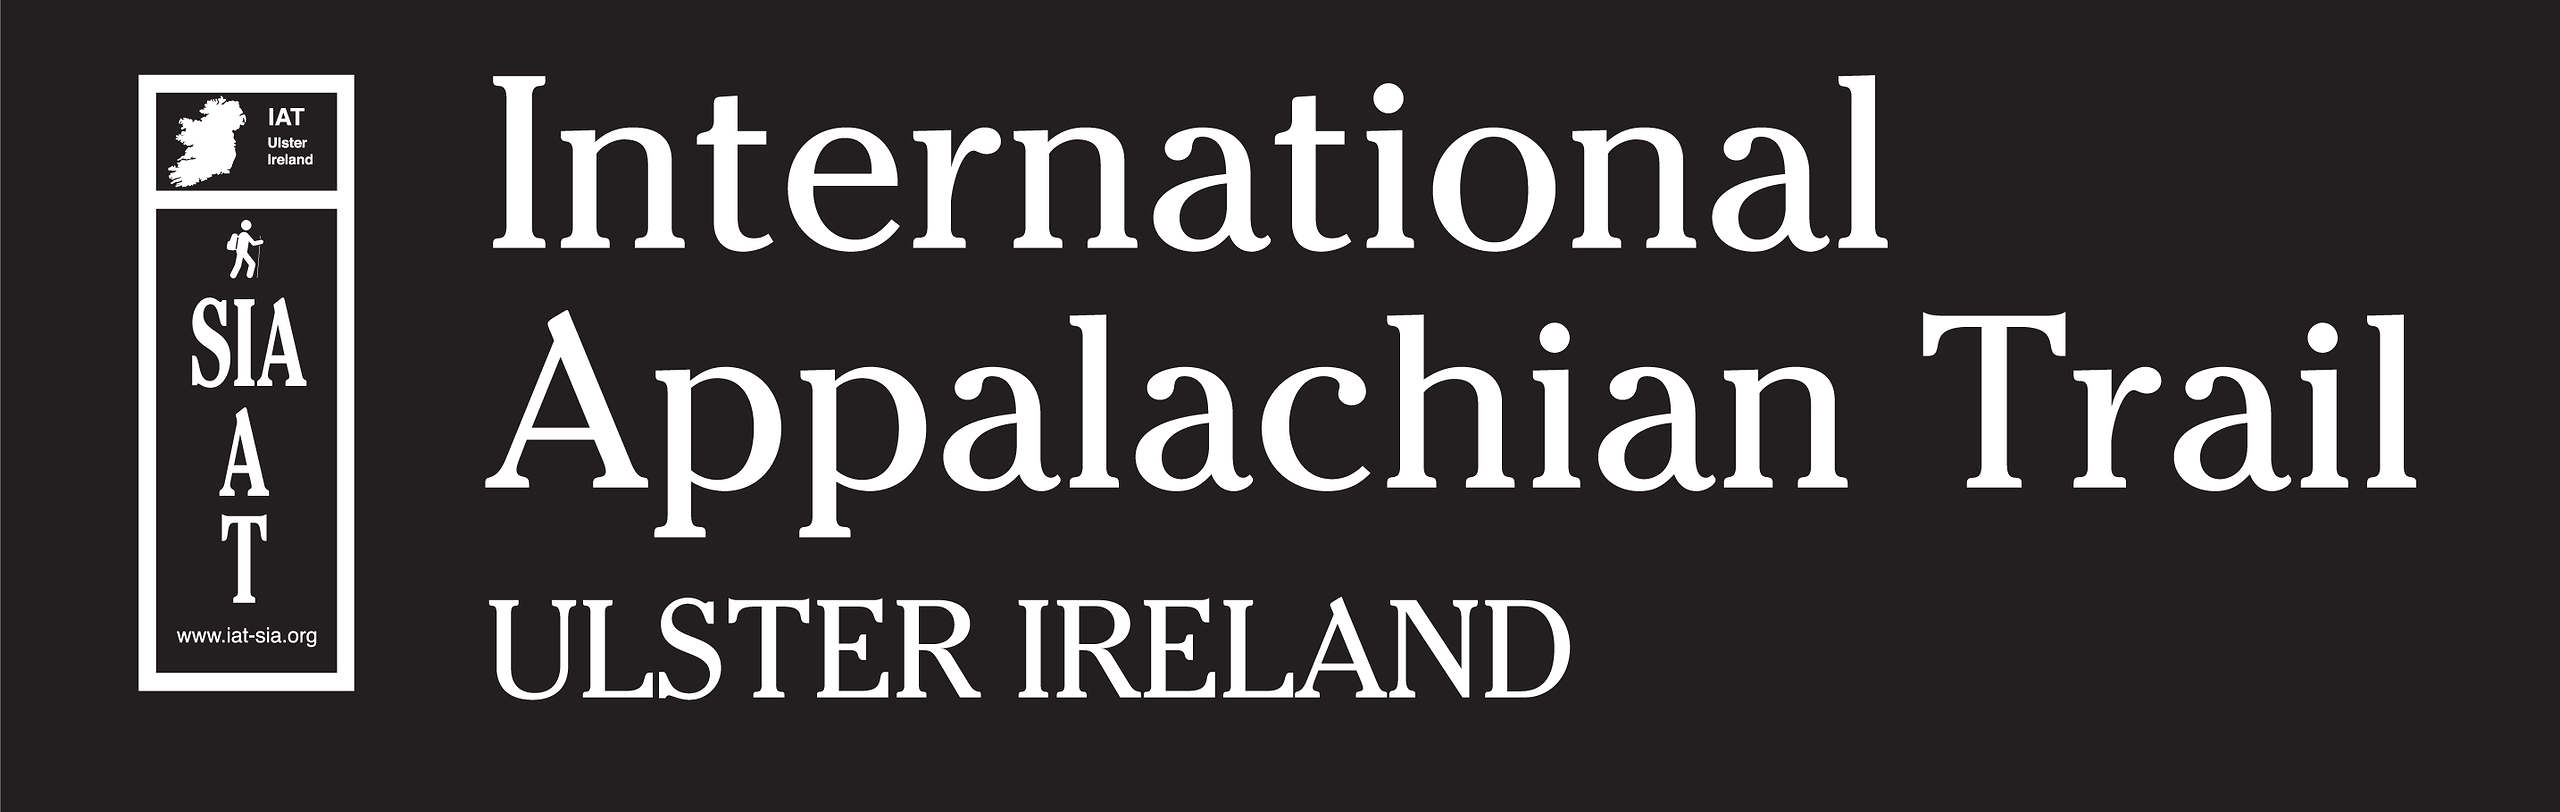 International Appalachian Trail (IAT) Ulster-Ireland Logo